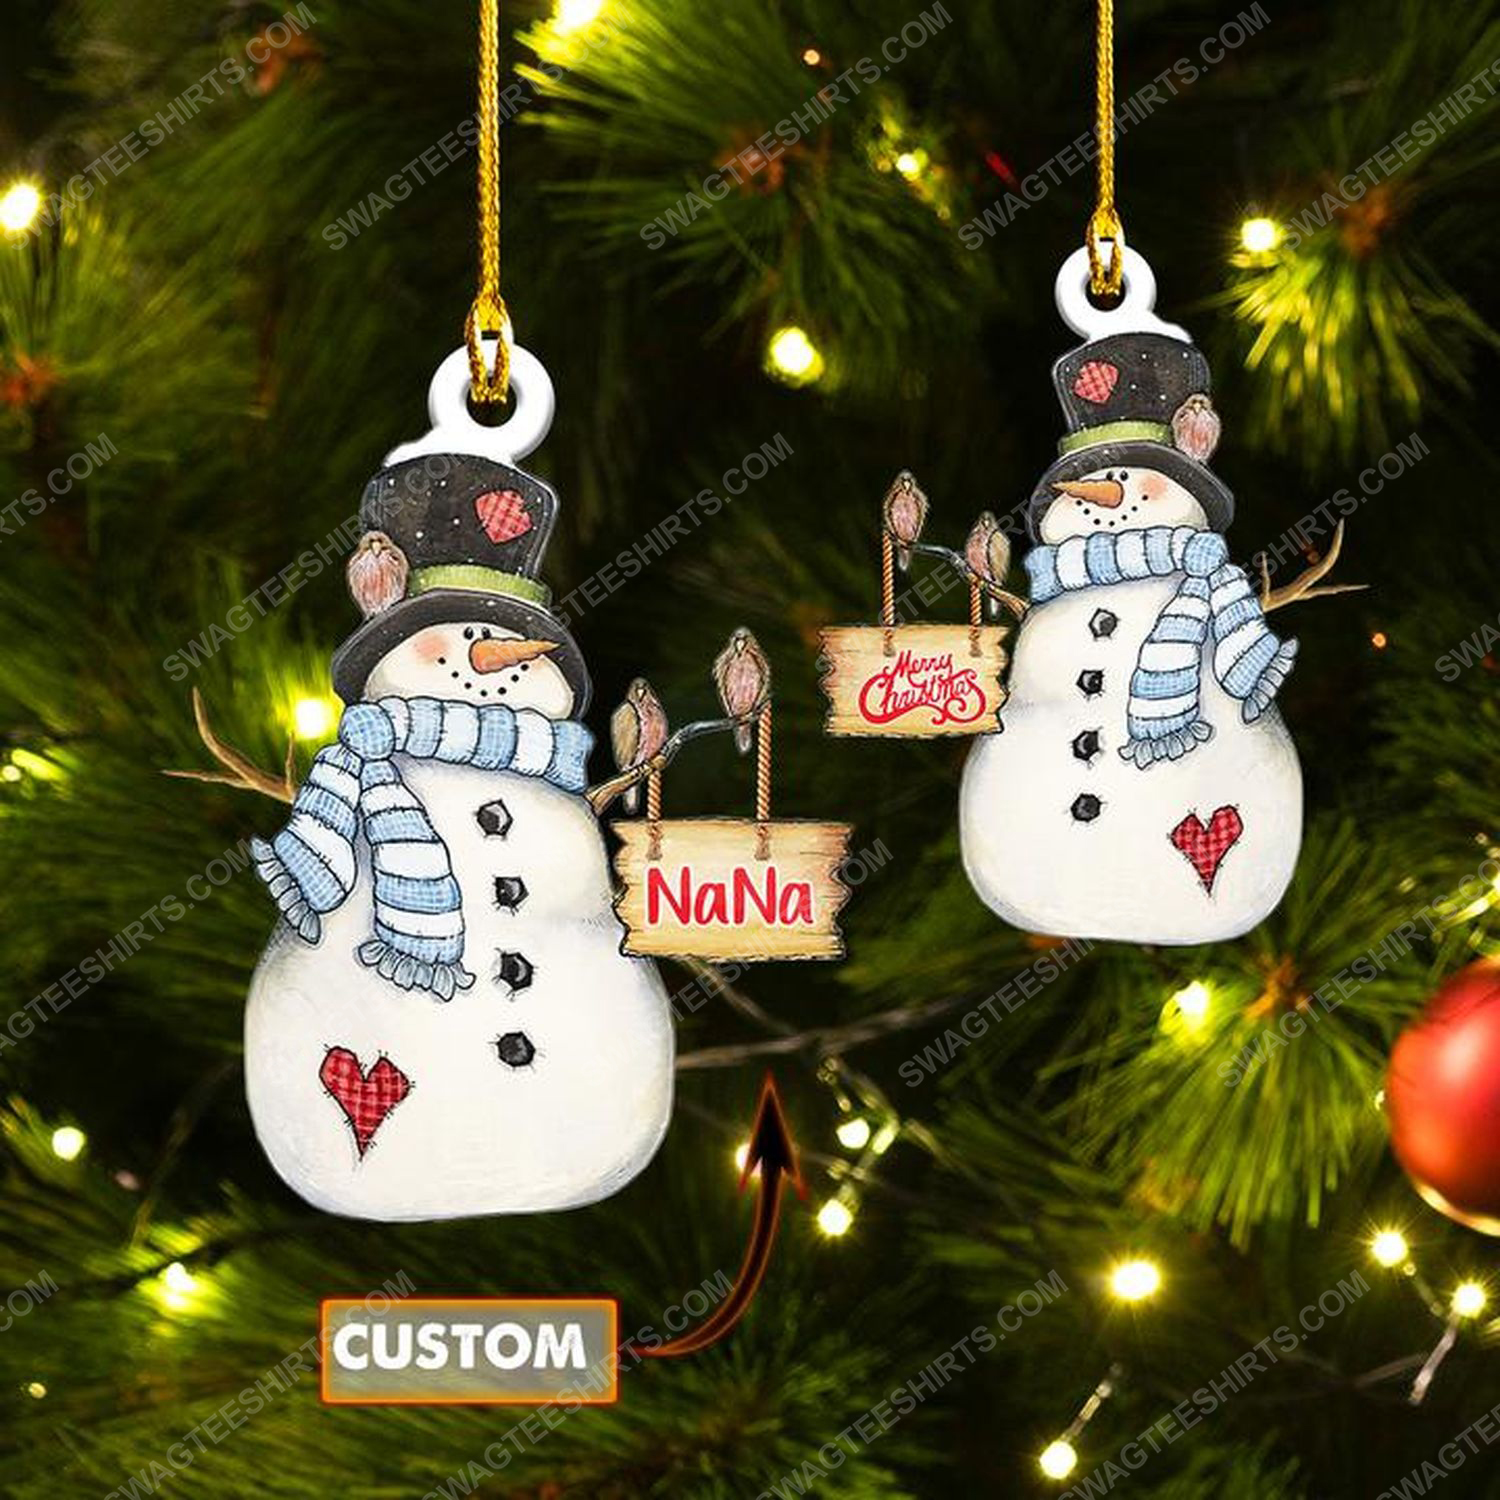 Custom snowman christmas gift ornament 1 - Copy (2)